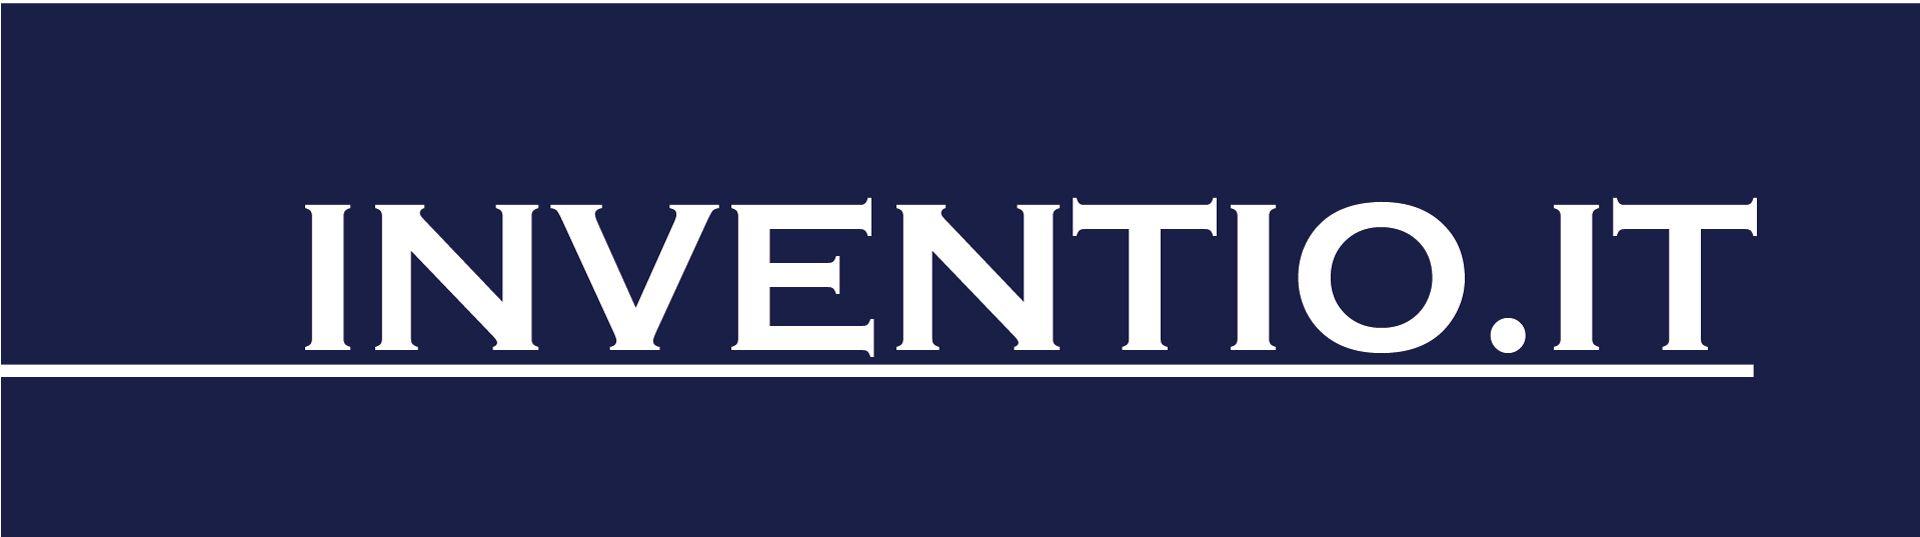 Inventio Logo - LogoDix